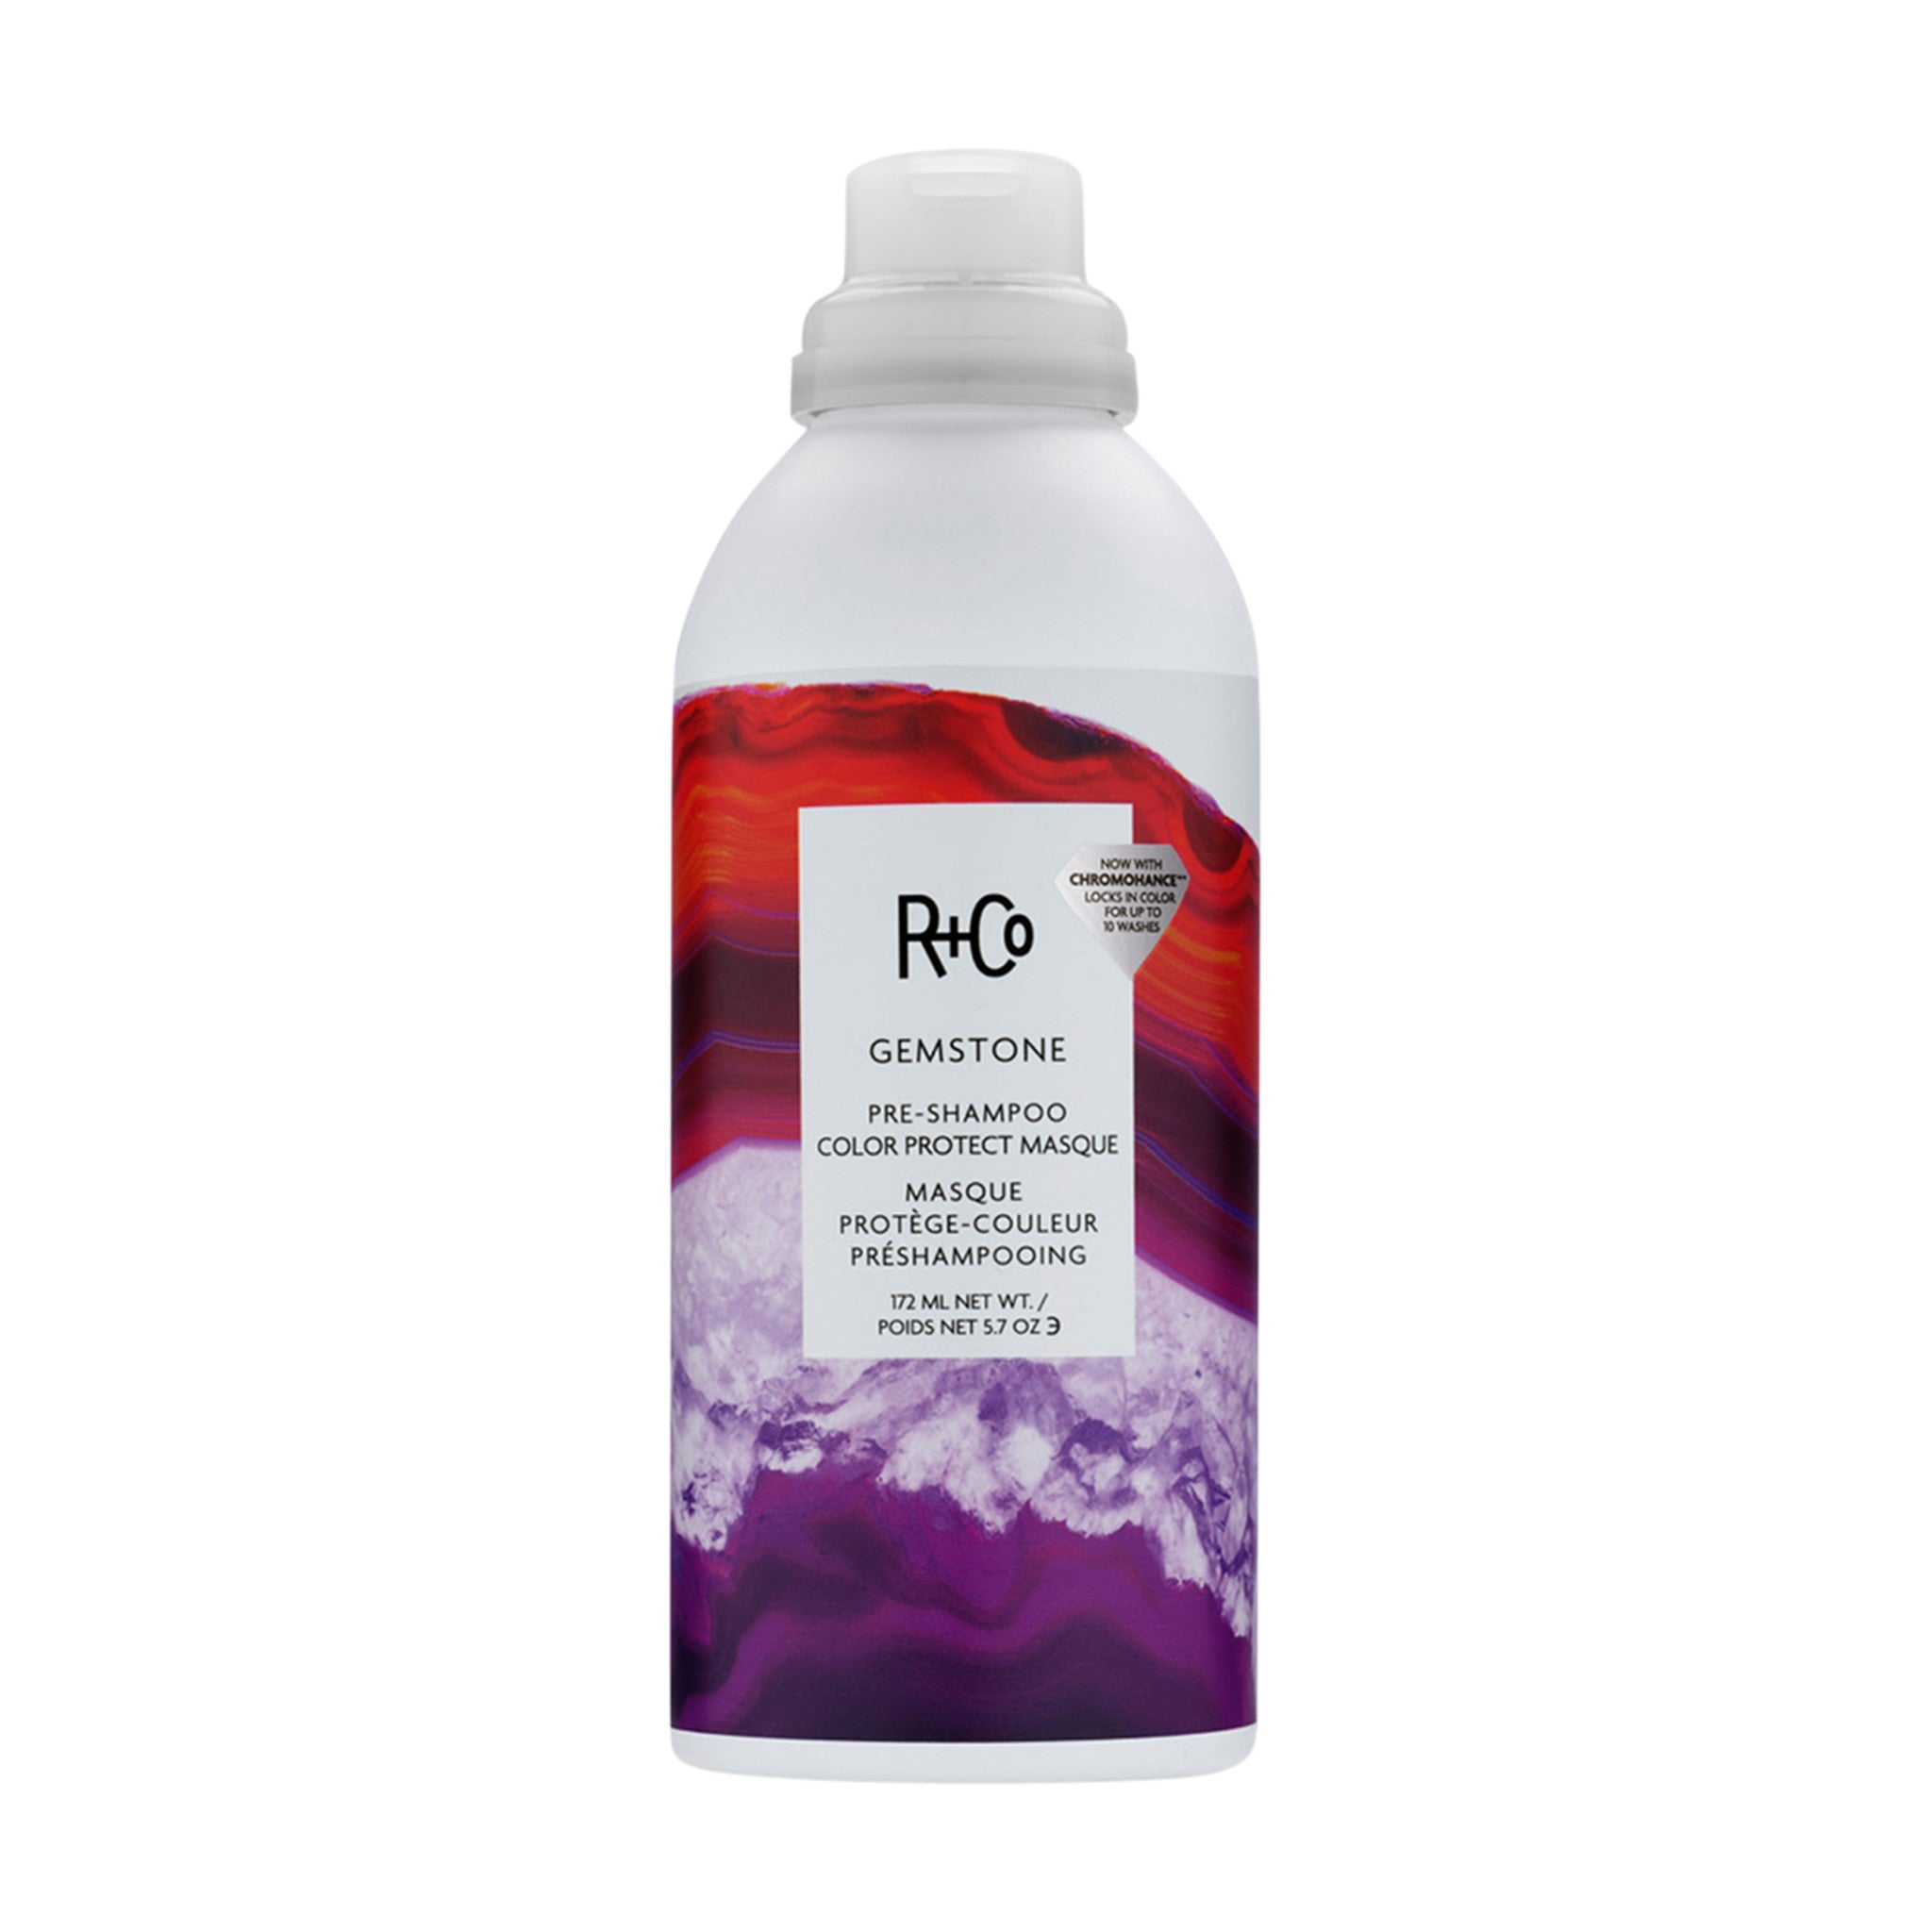 R+Co Gemstone Pre-Shampoo Color Protect Masque main image.